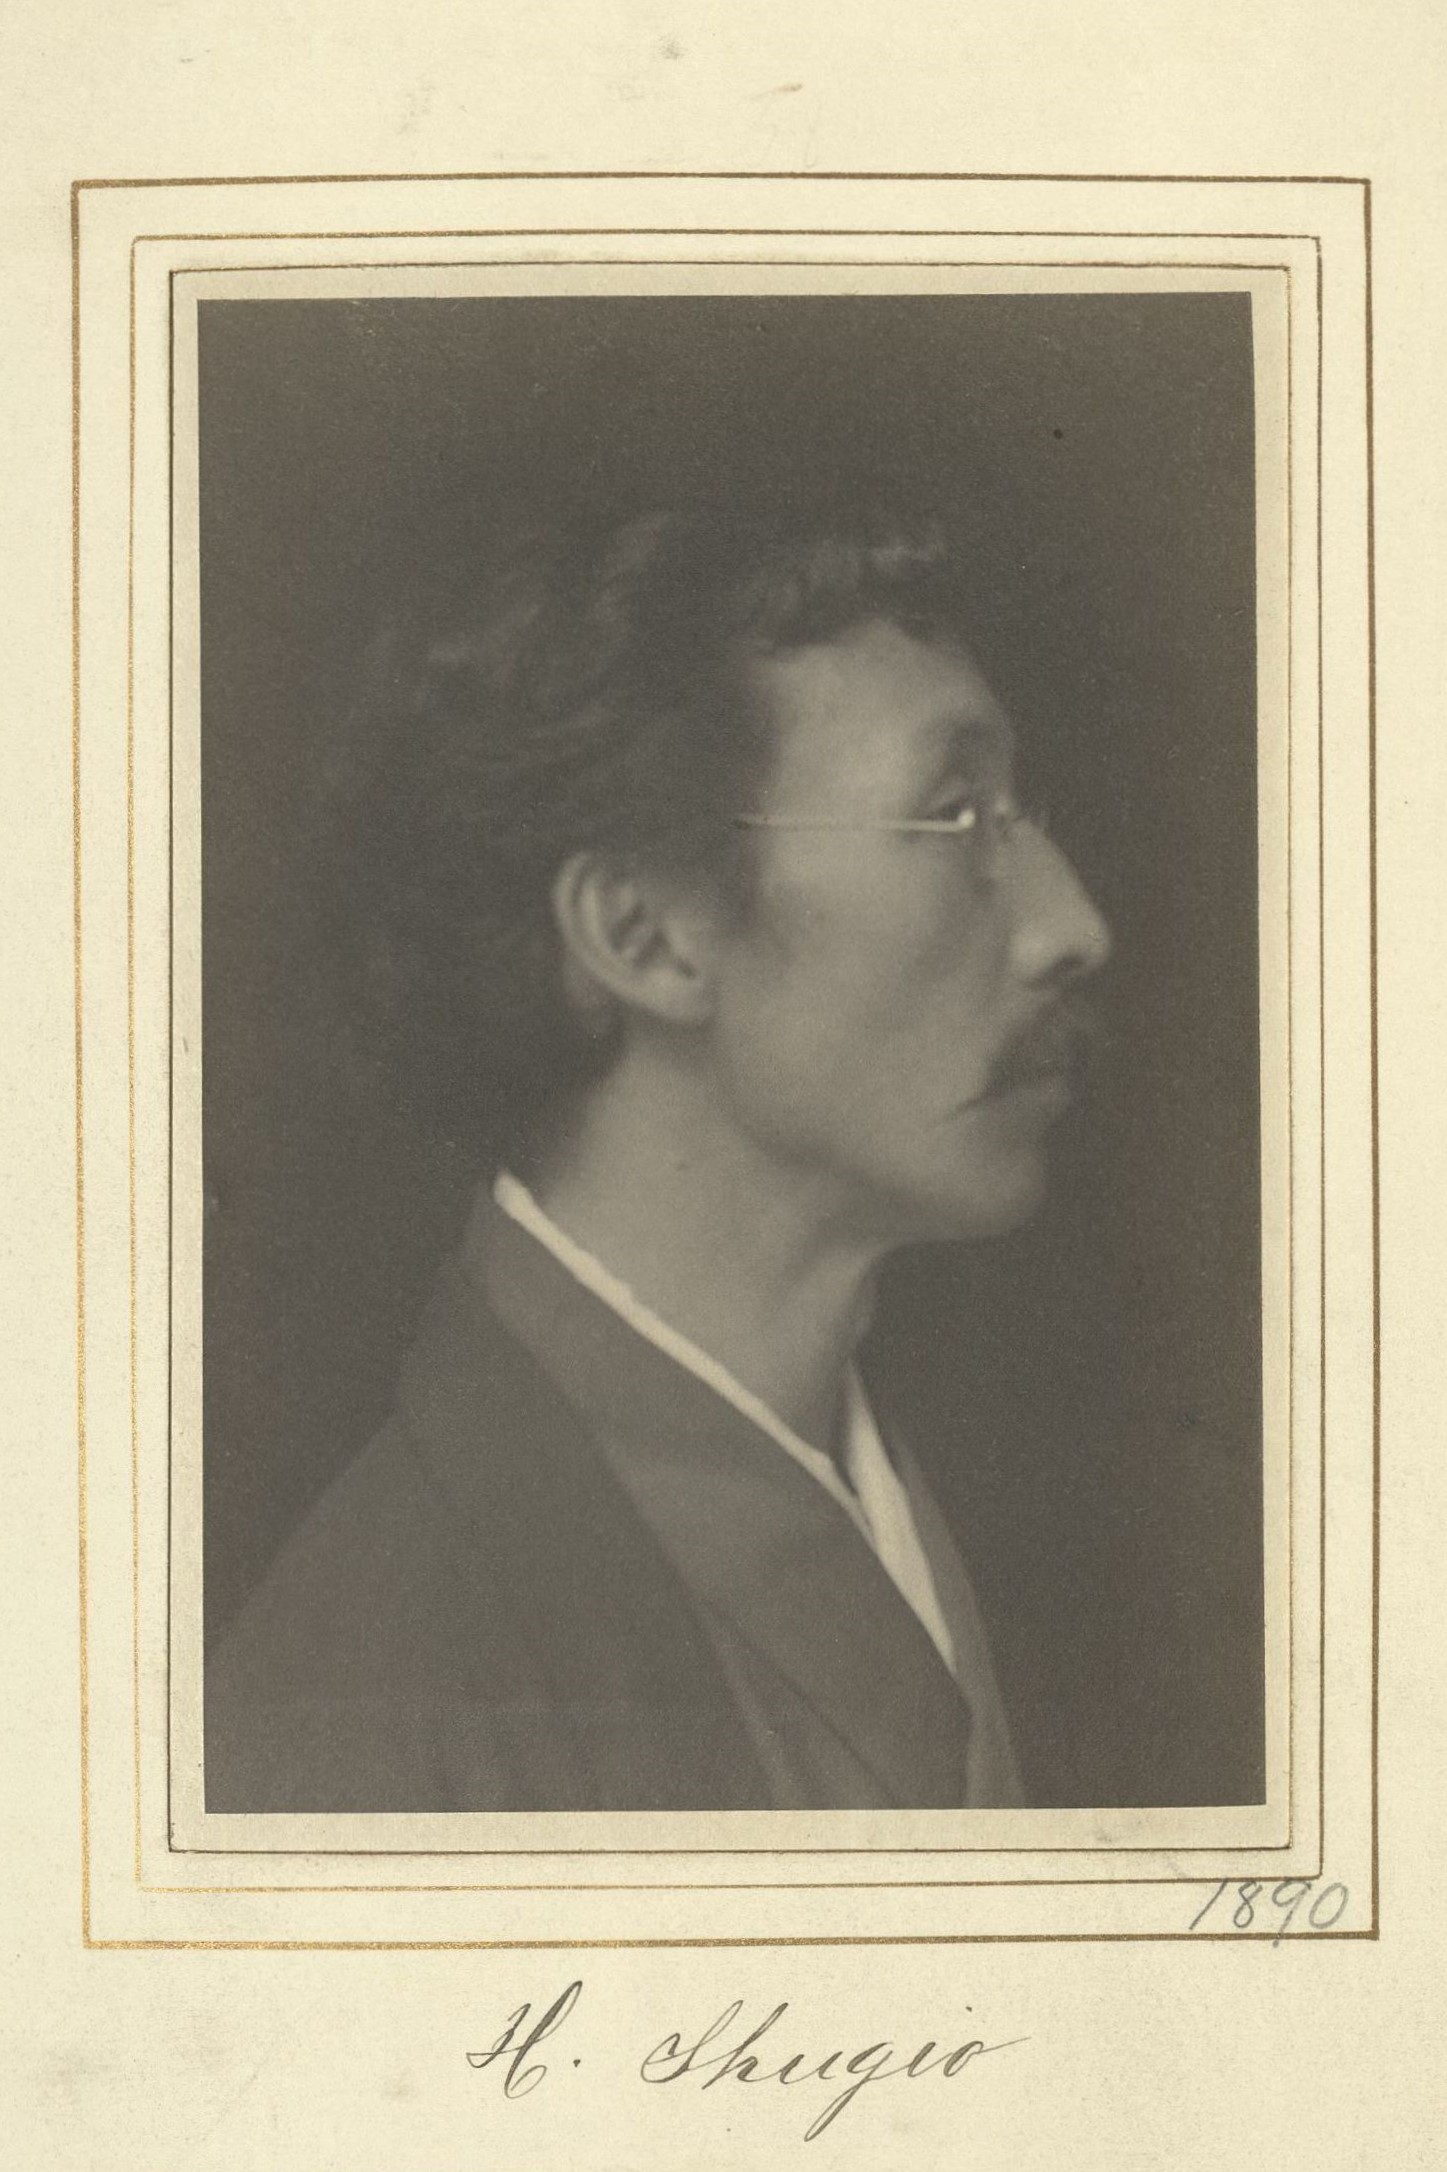 Member portrait of Hiromichi Shugio